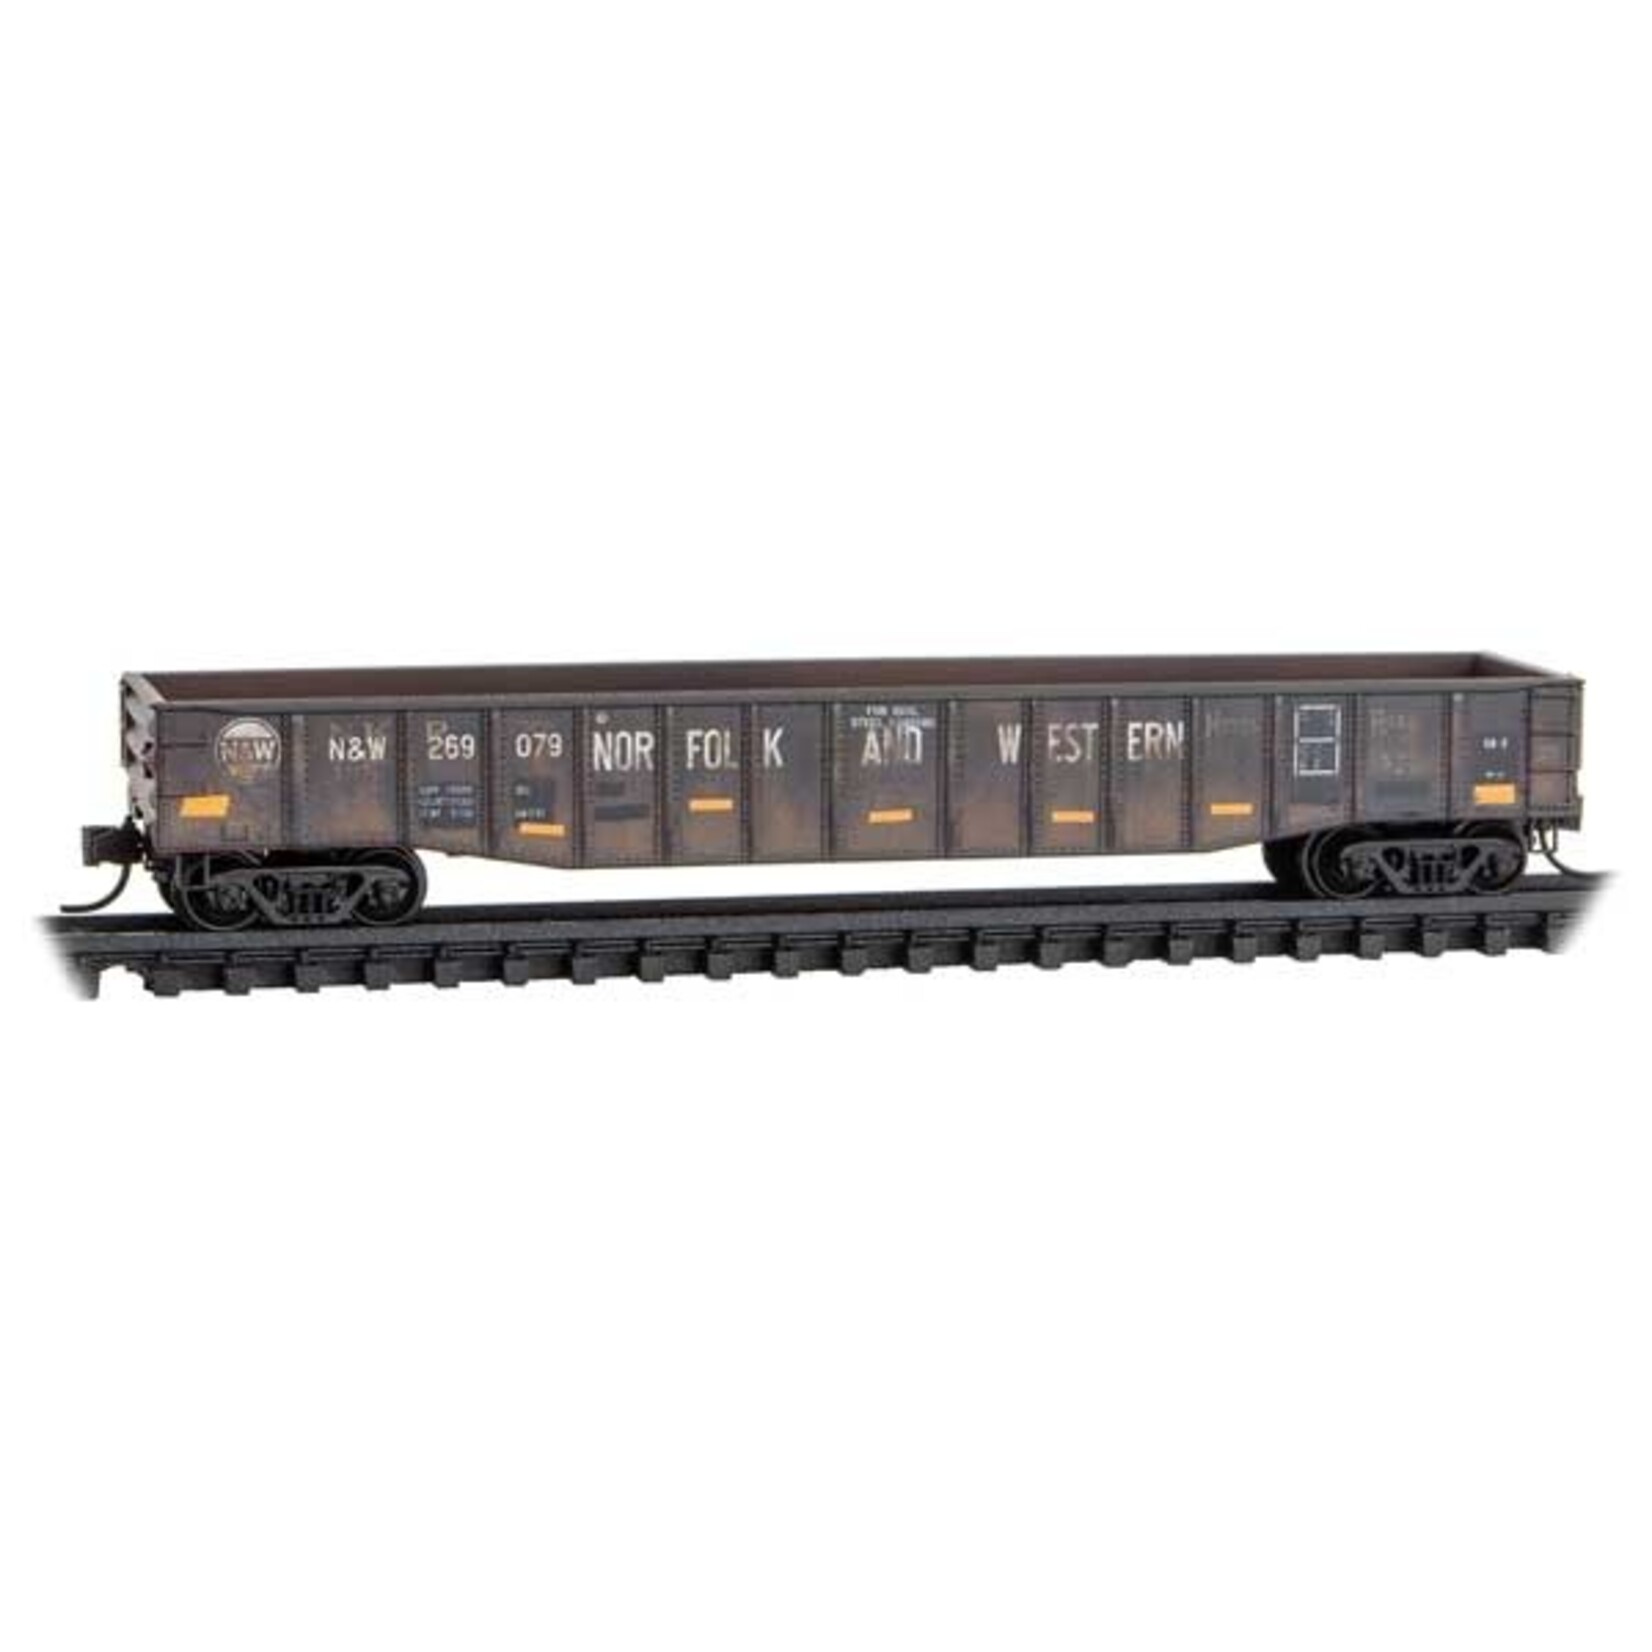 Micro Trains Line 10544620 N Norfolk & Western Family Tree Gondola #4 Rd# 269079